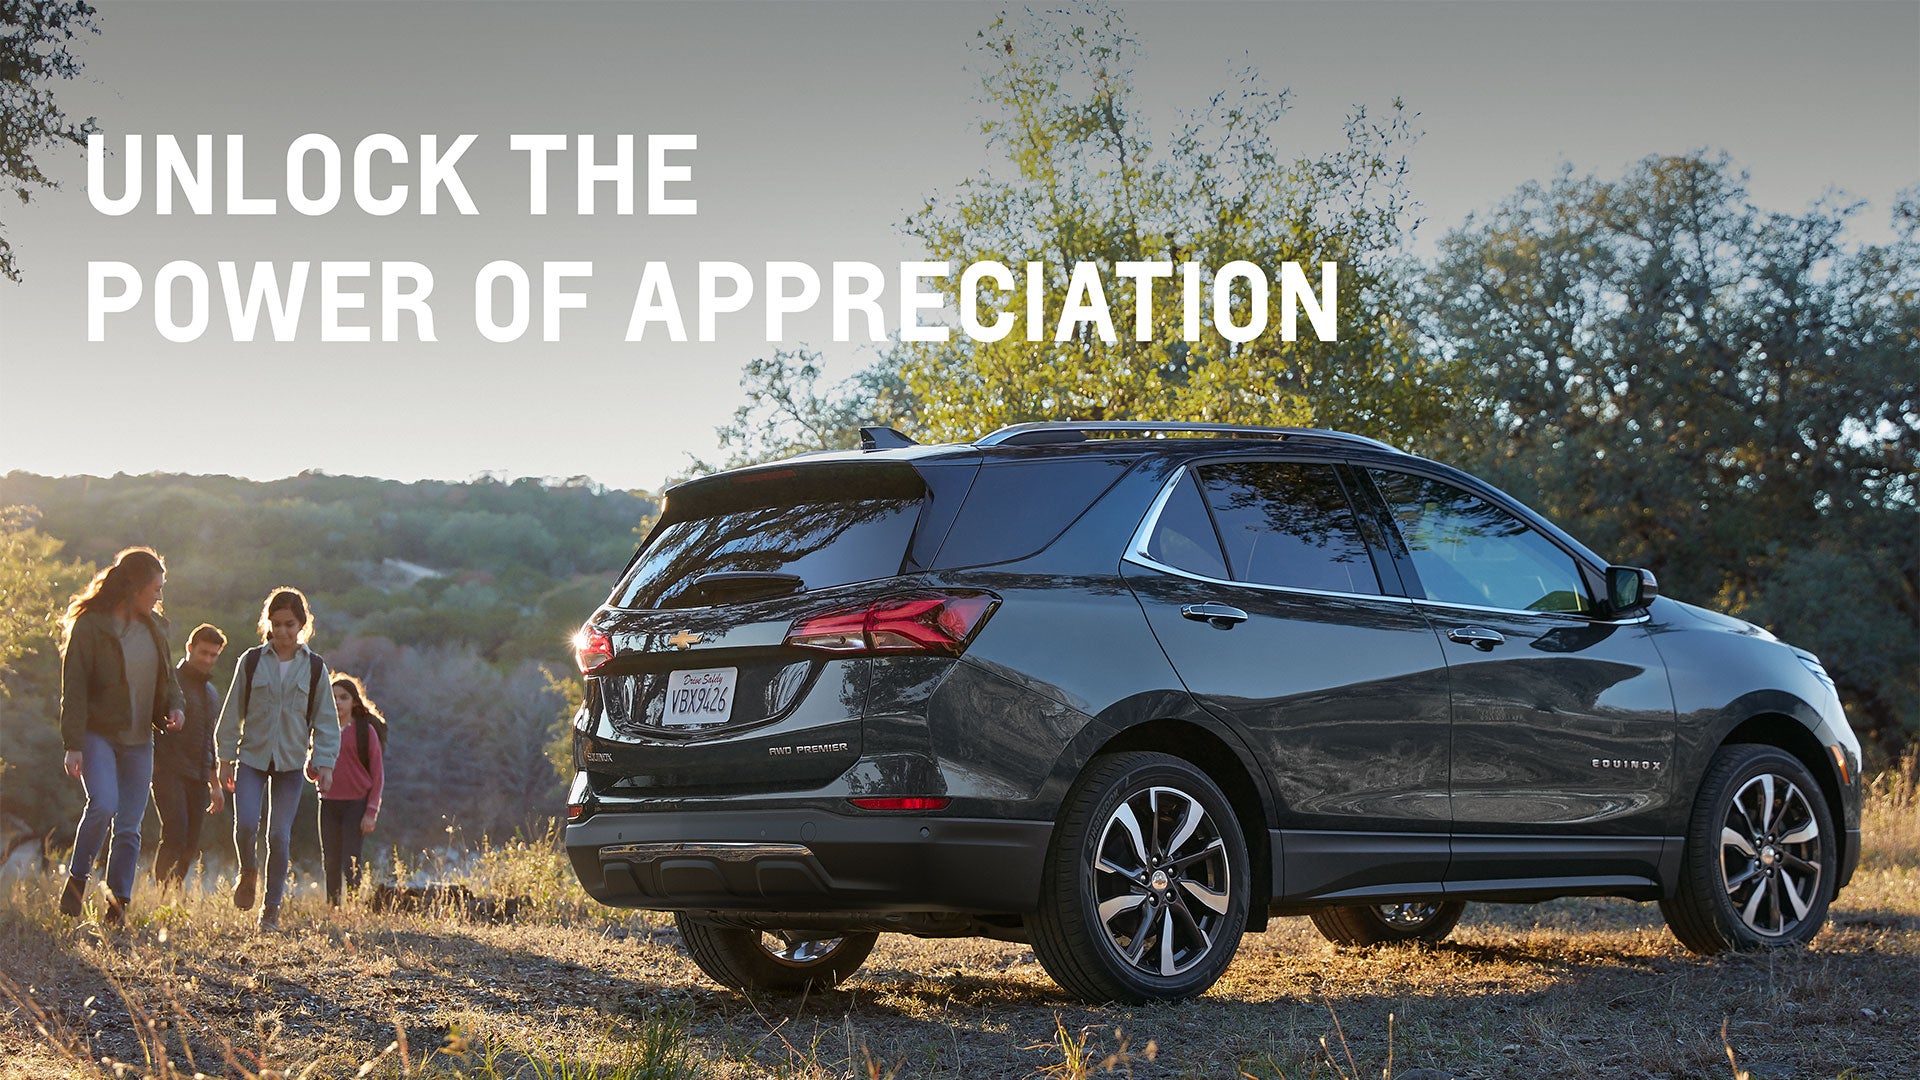 Unlock the power of appreciation | Park Hills Chevrolet in Park Hills MO